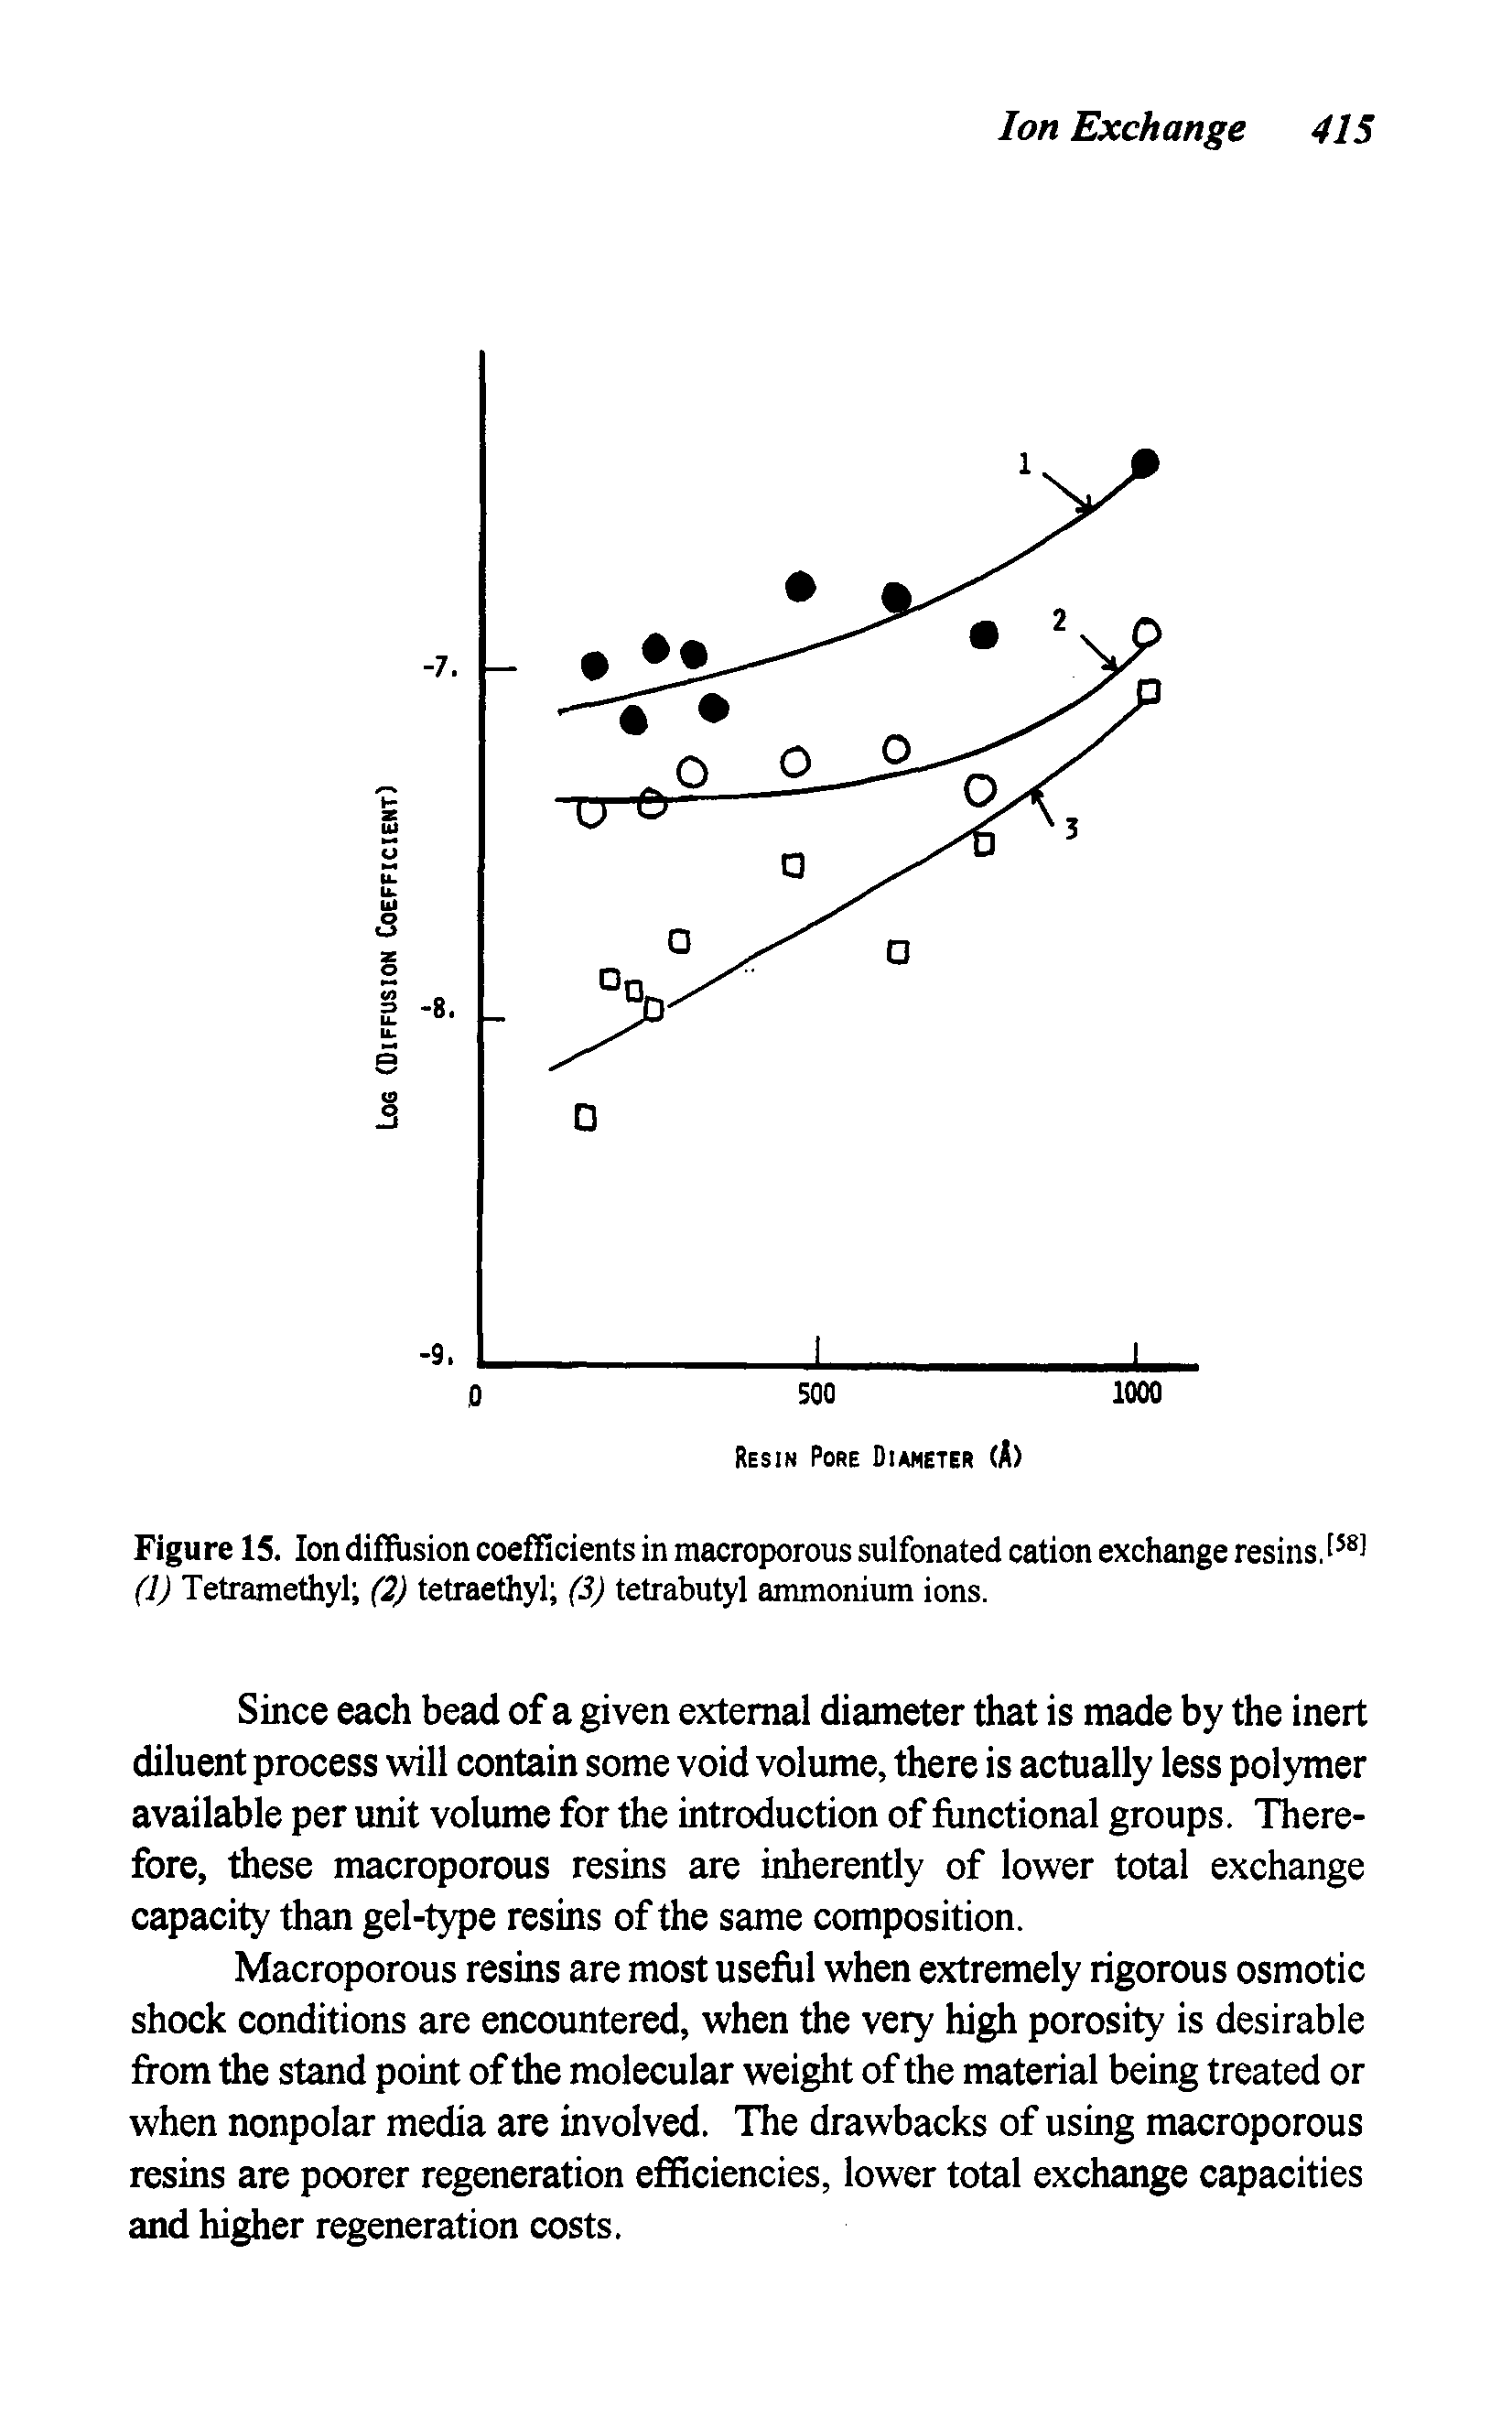 Figure 15. Ion difiusion coefficients in macroporous sulfonated cation exchange resins (1) Tetramethyl (2) tetraethyl (3) tetrabutyl ammonium ions.